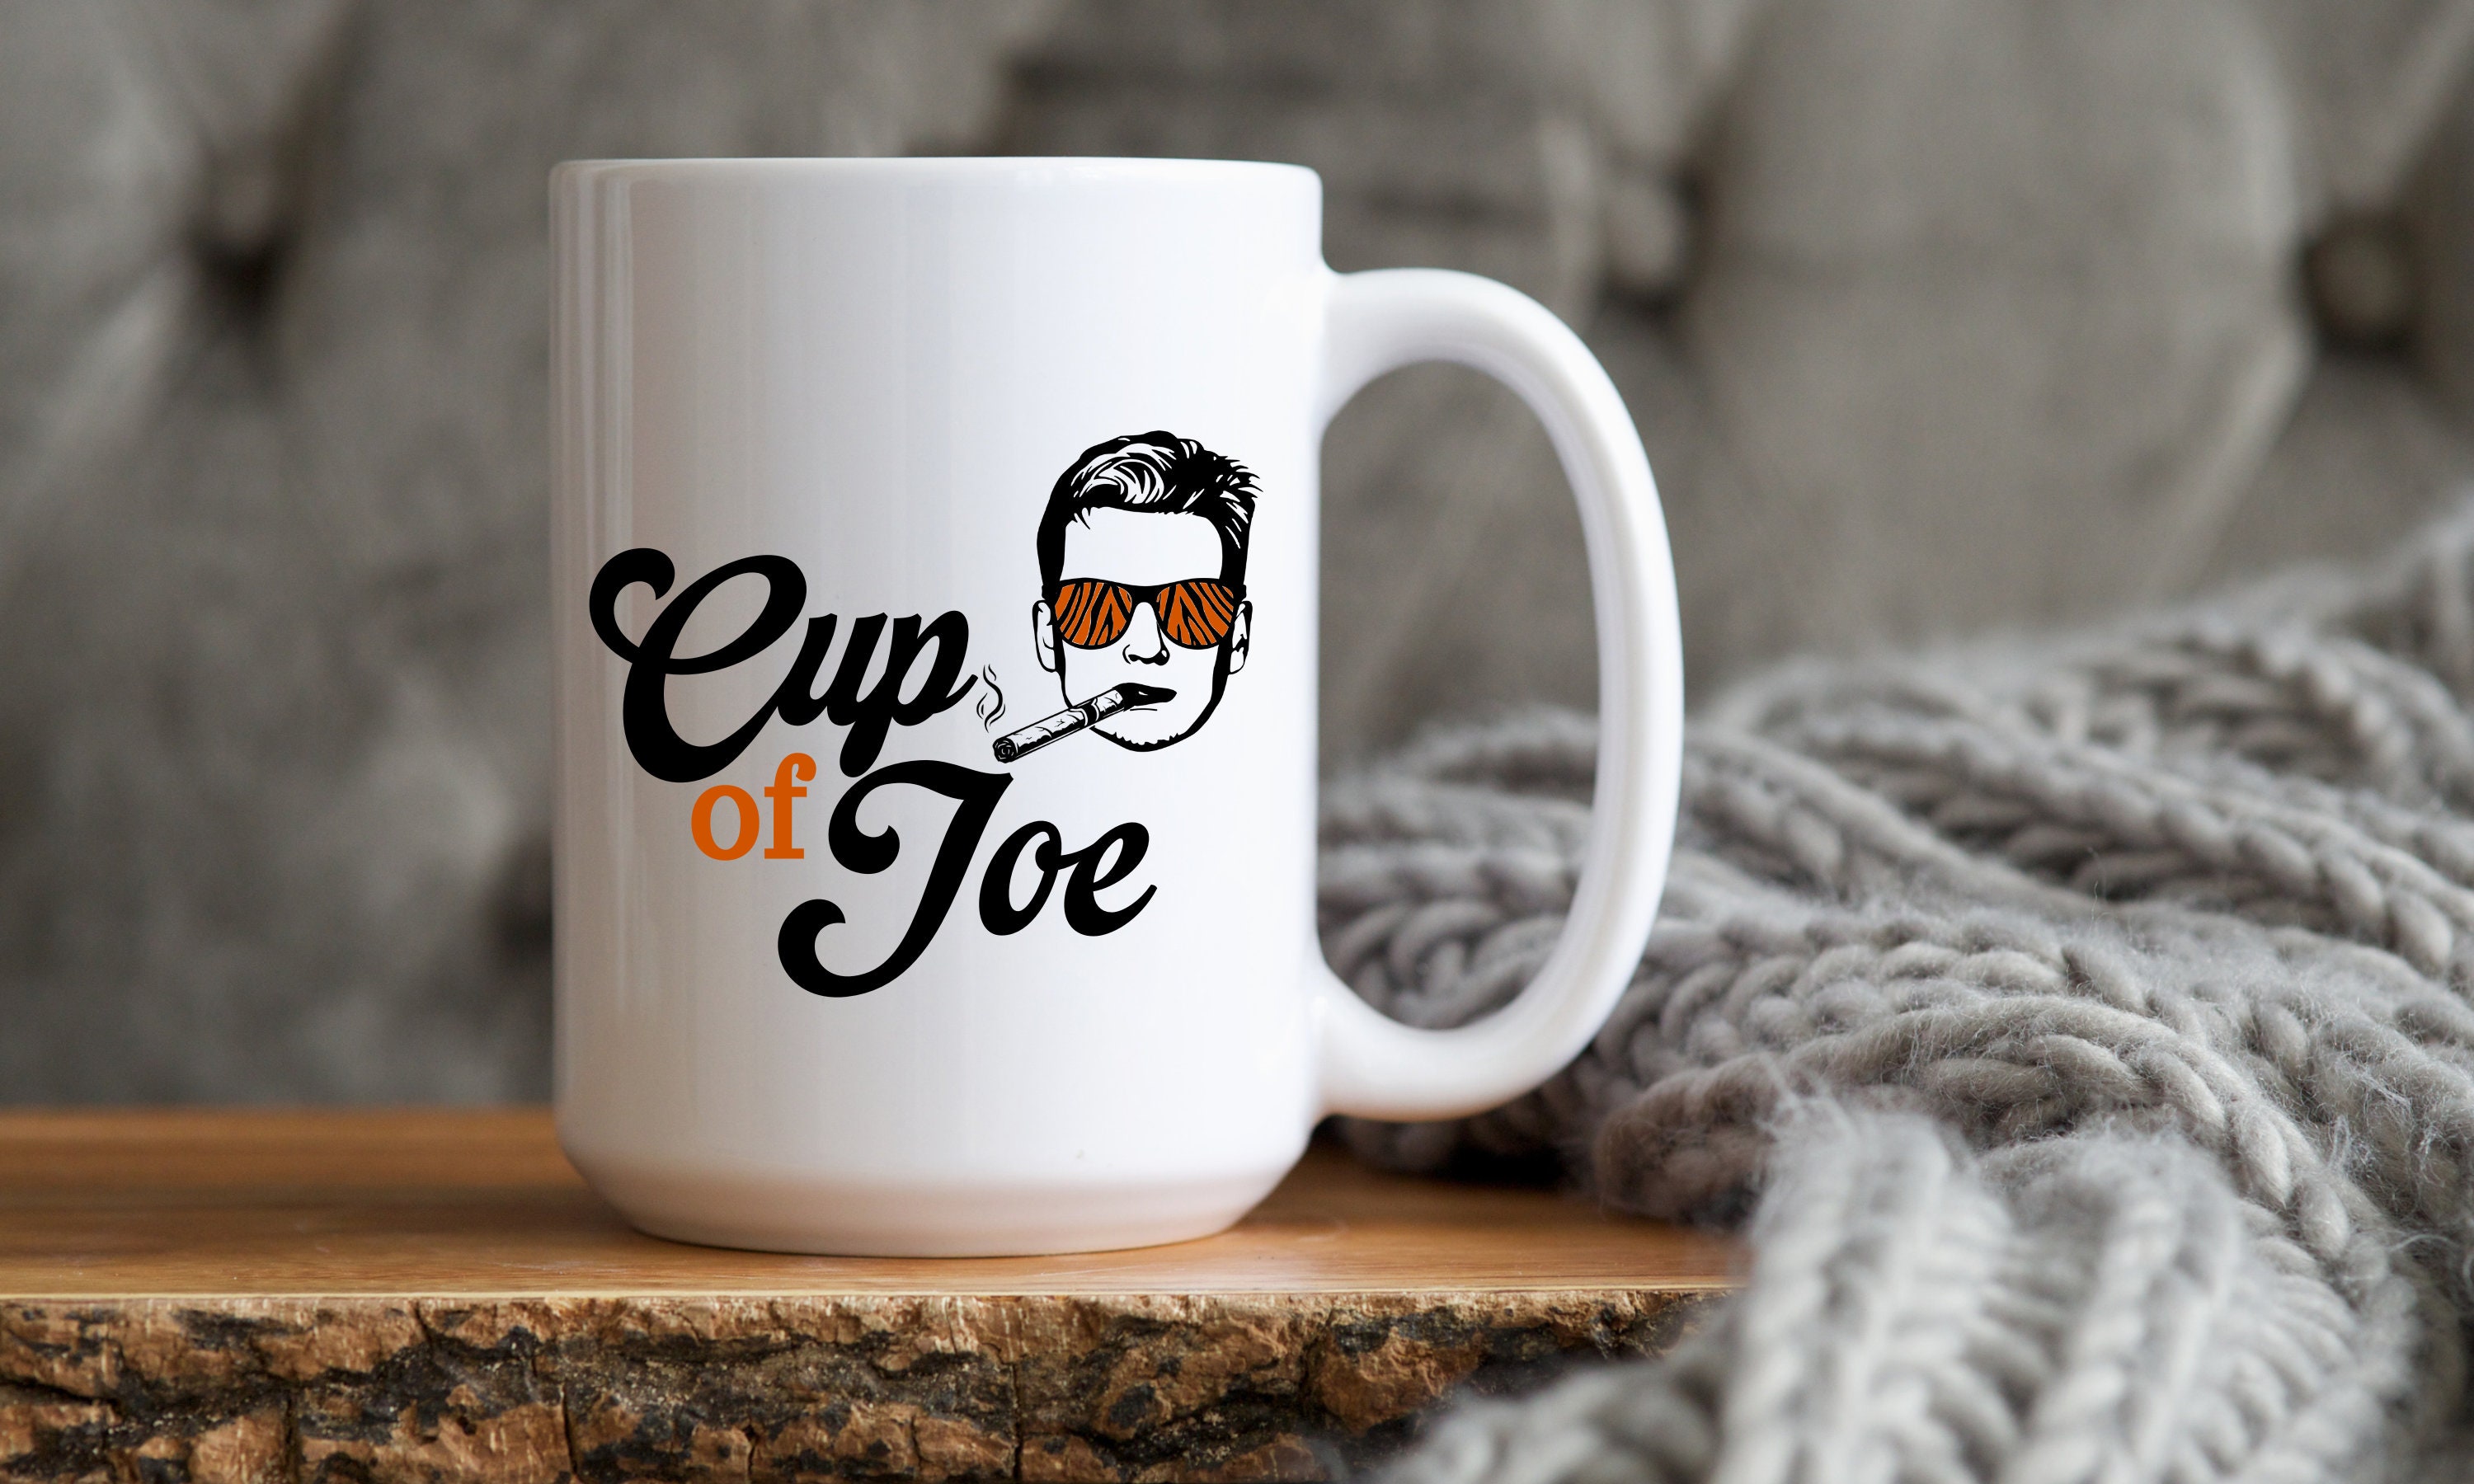 mmandiDESIGNS Ohio State Grandma Mug - Ceramic Coffee or Tea Cup - 15oz